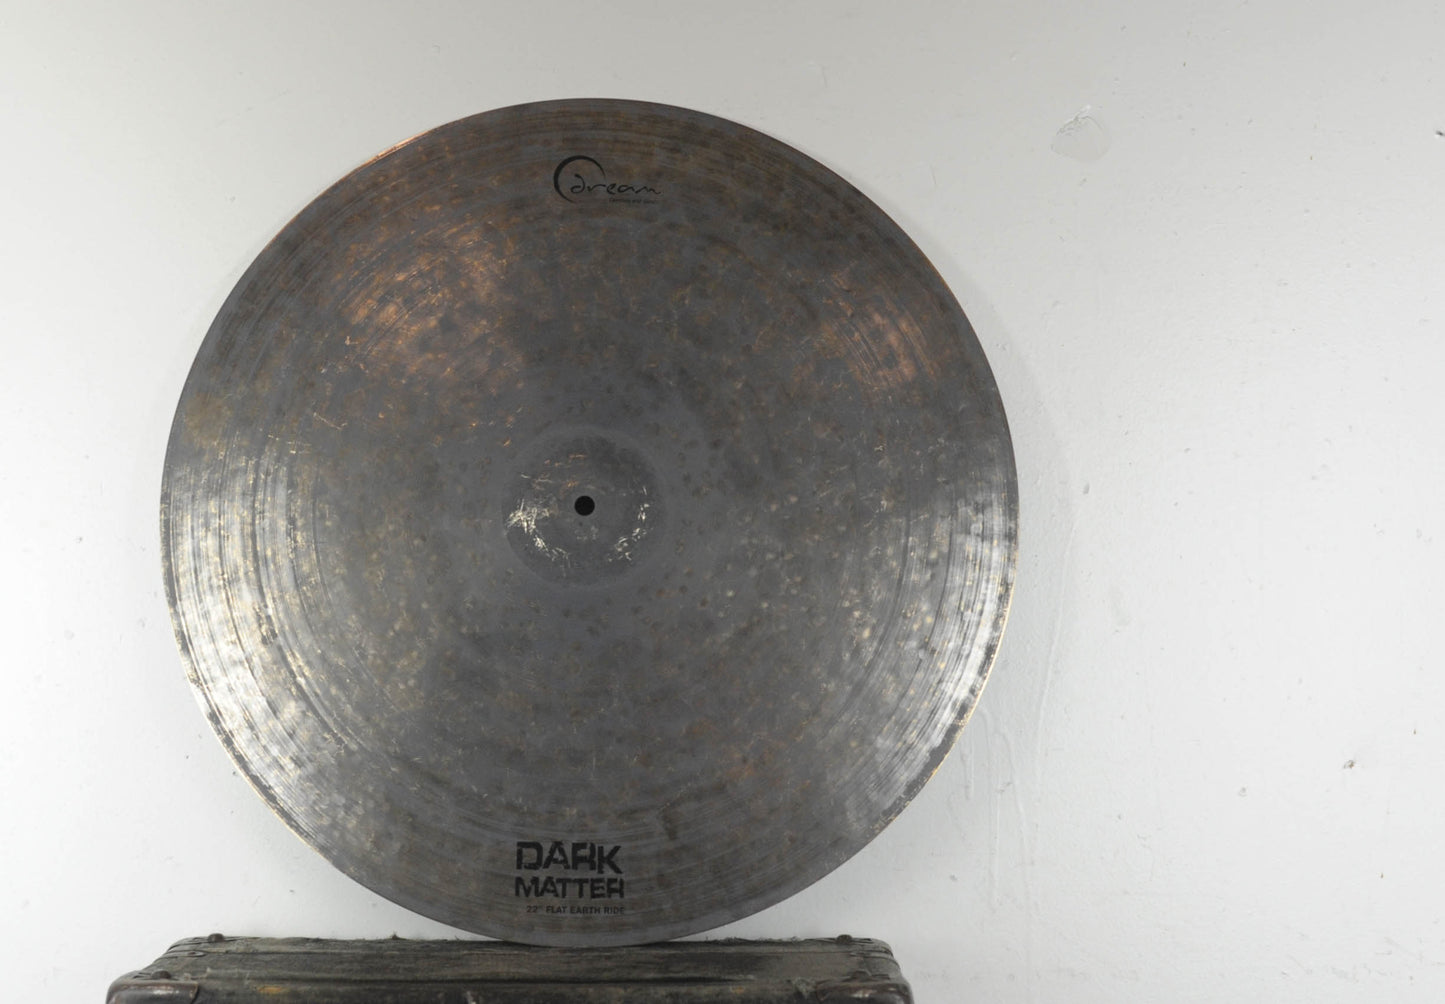 Dream Cymbals 22" Dark Matter Flat Earth Series Ride Cymbal 2458g